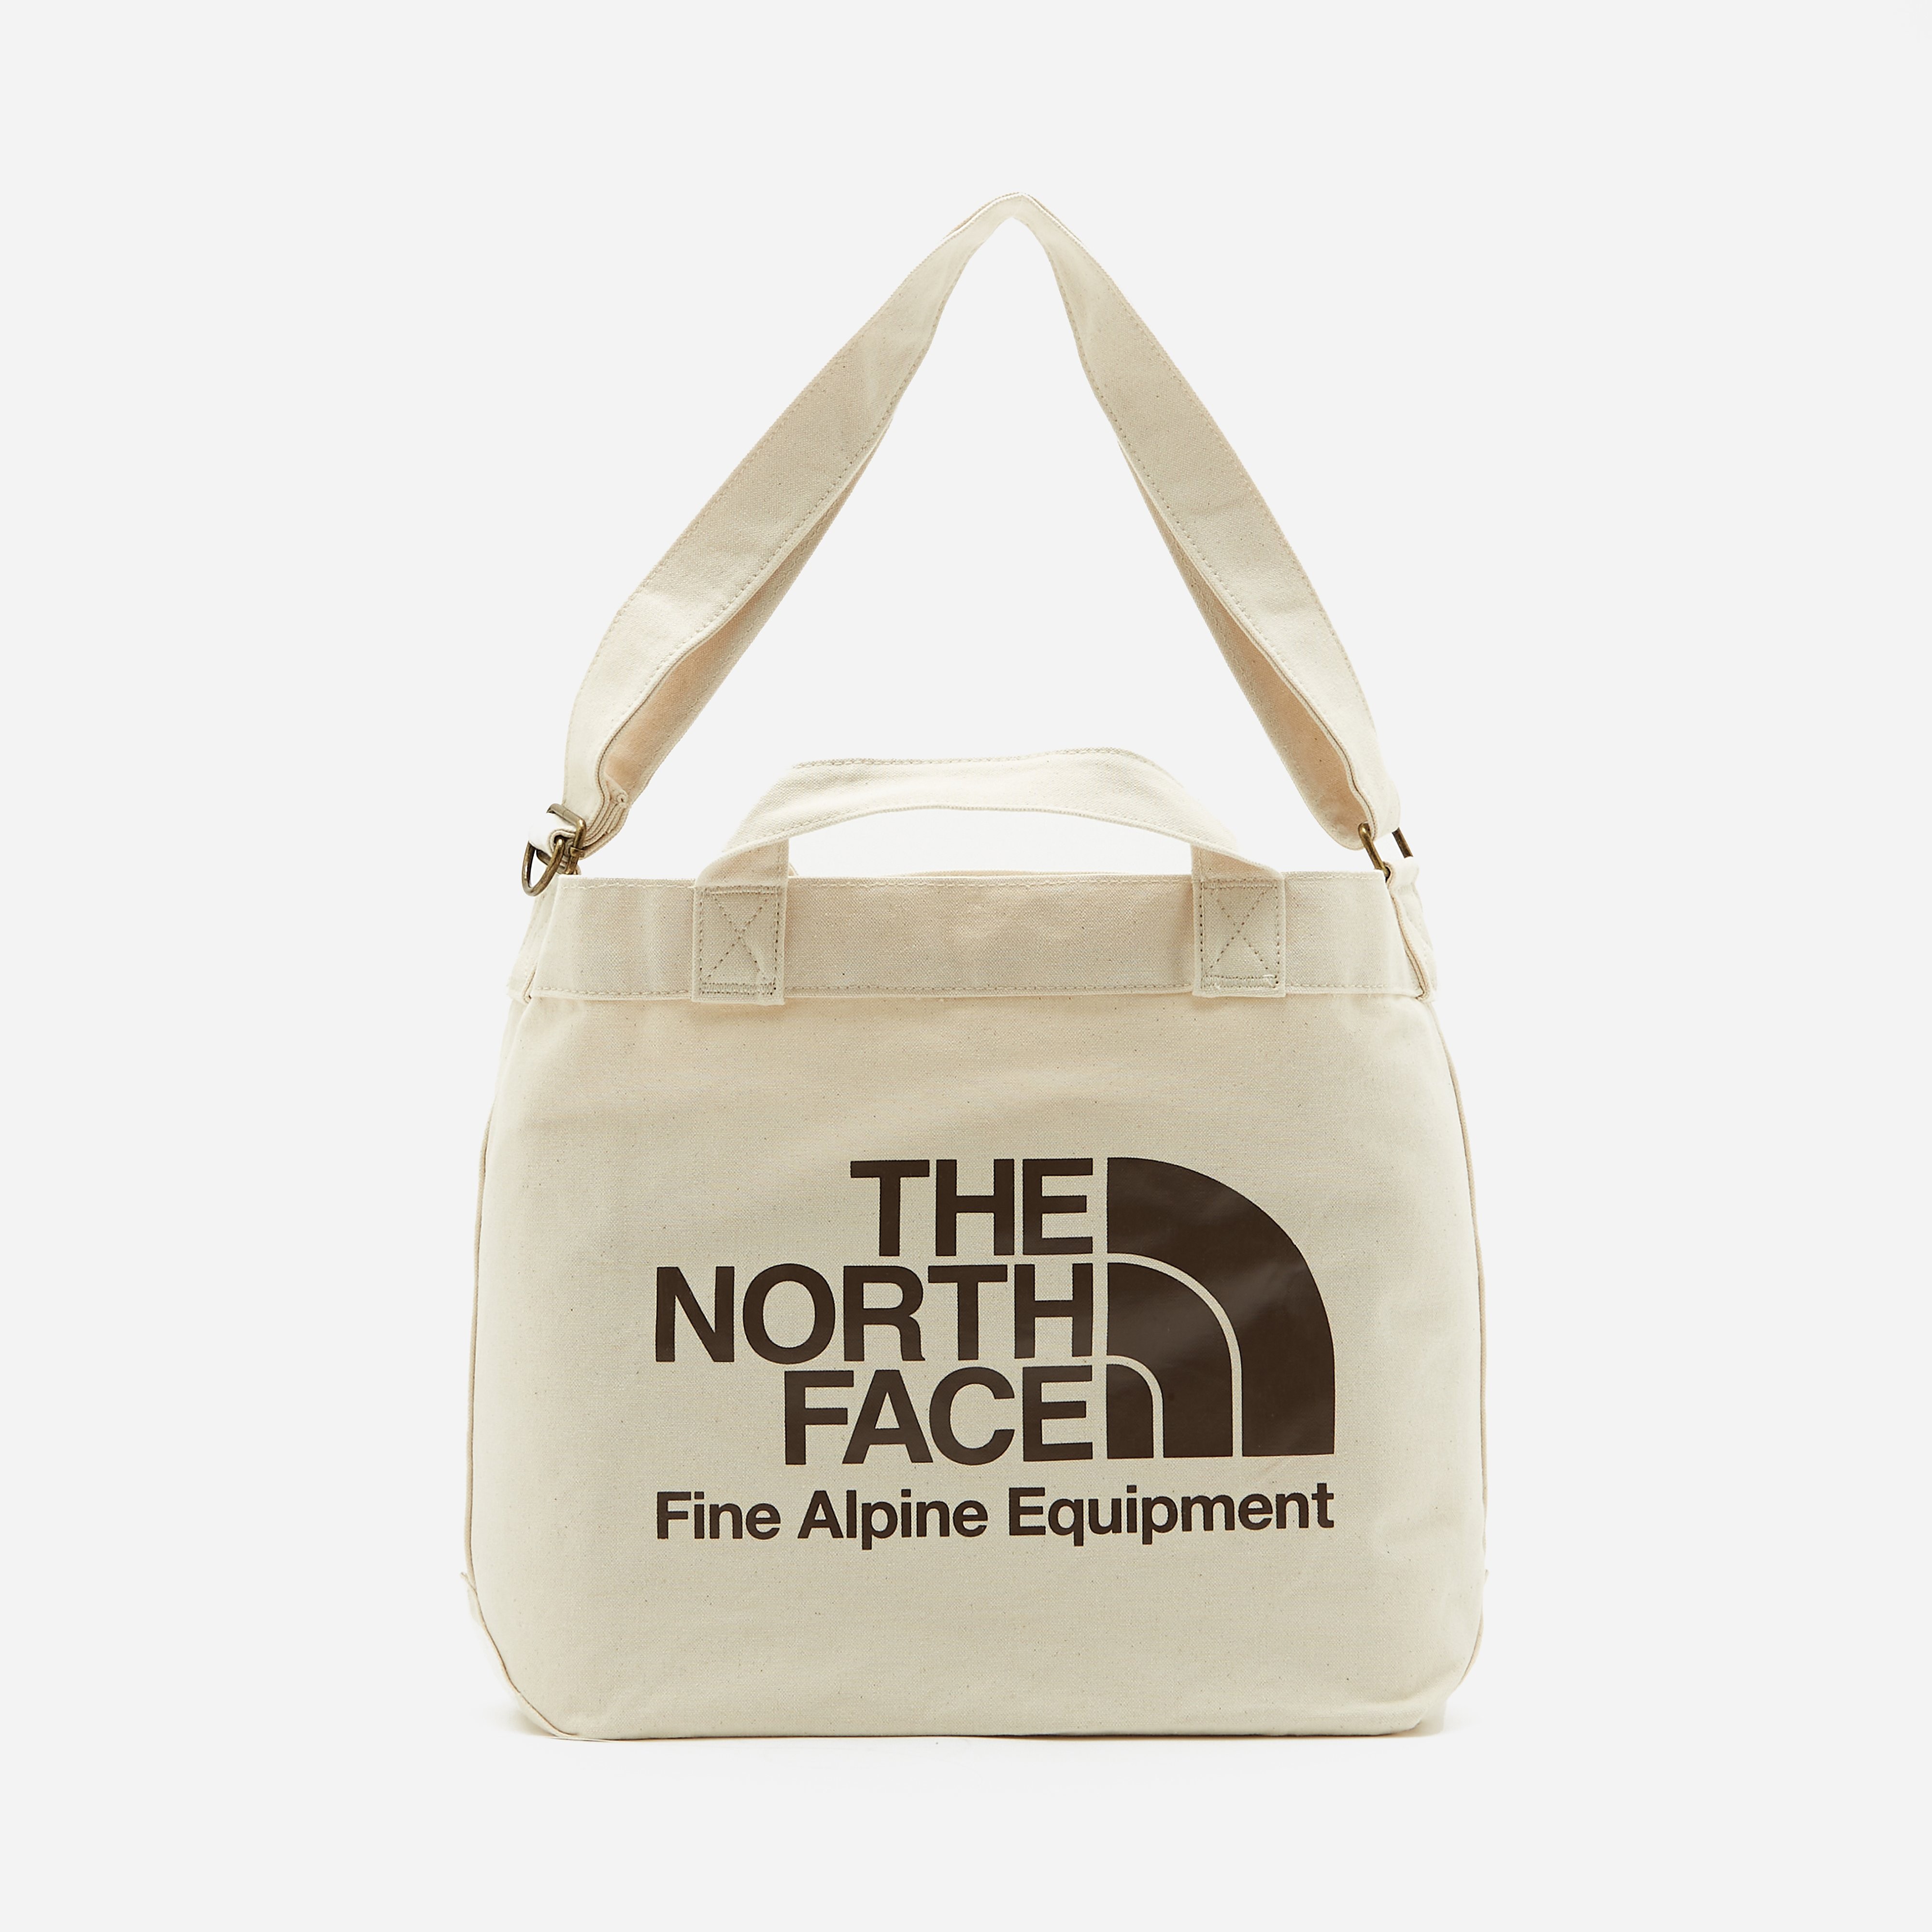 The North Face Adjustable Tote Bag, Beige